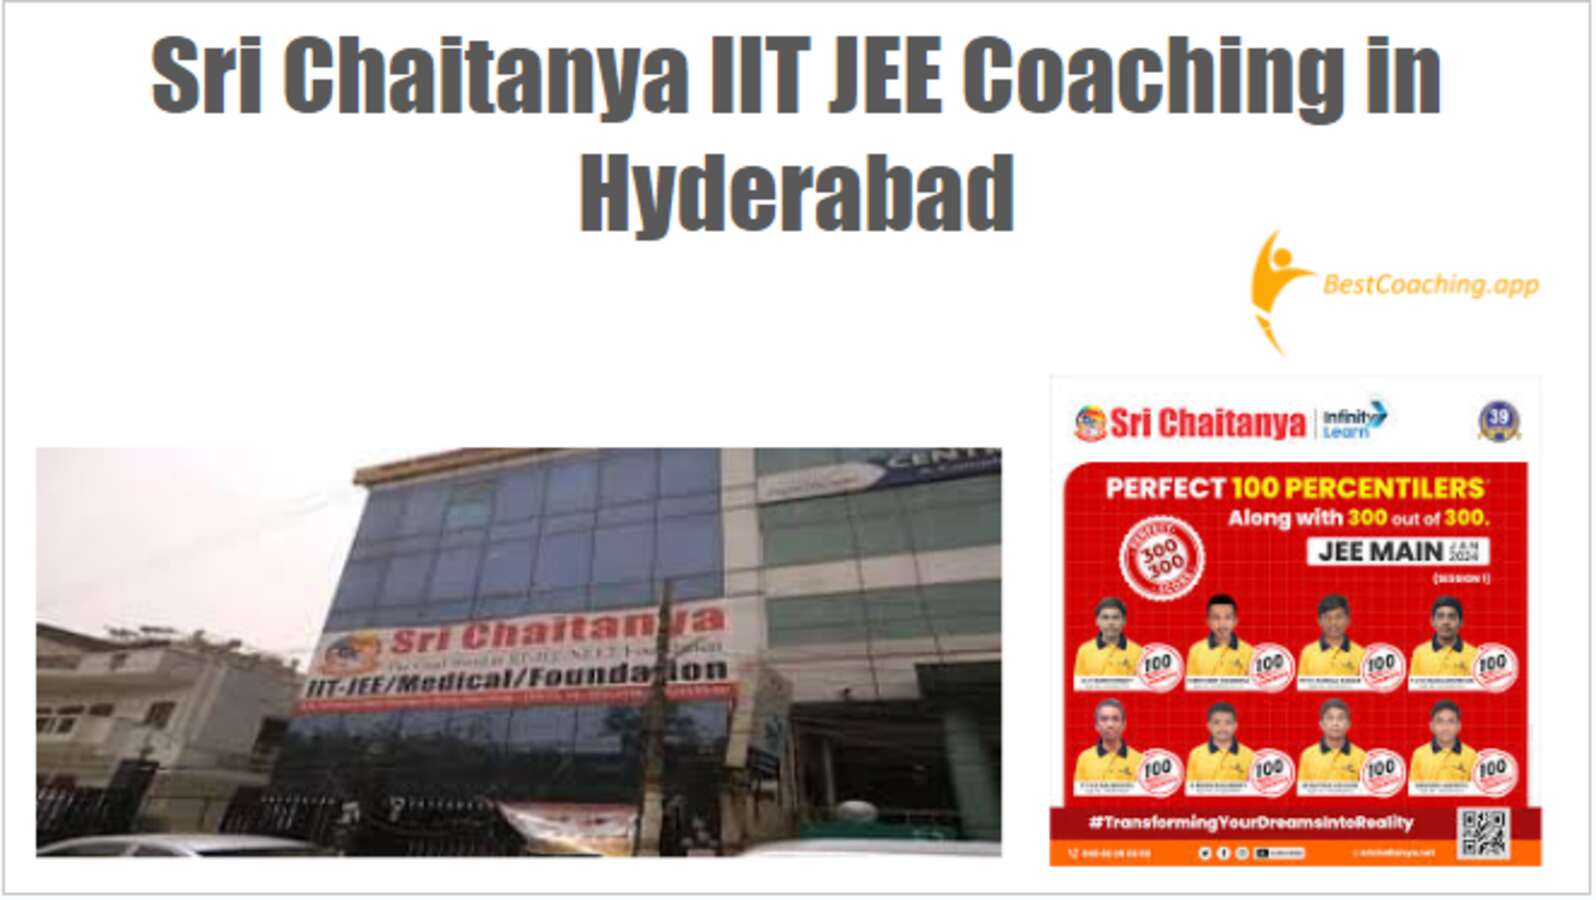 Sri Chaitanya IIT JEE Coaching in Hyderabad Reviews